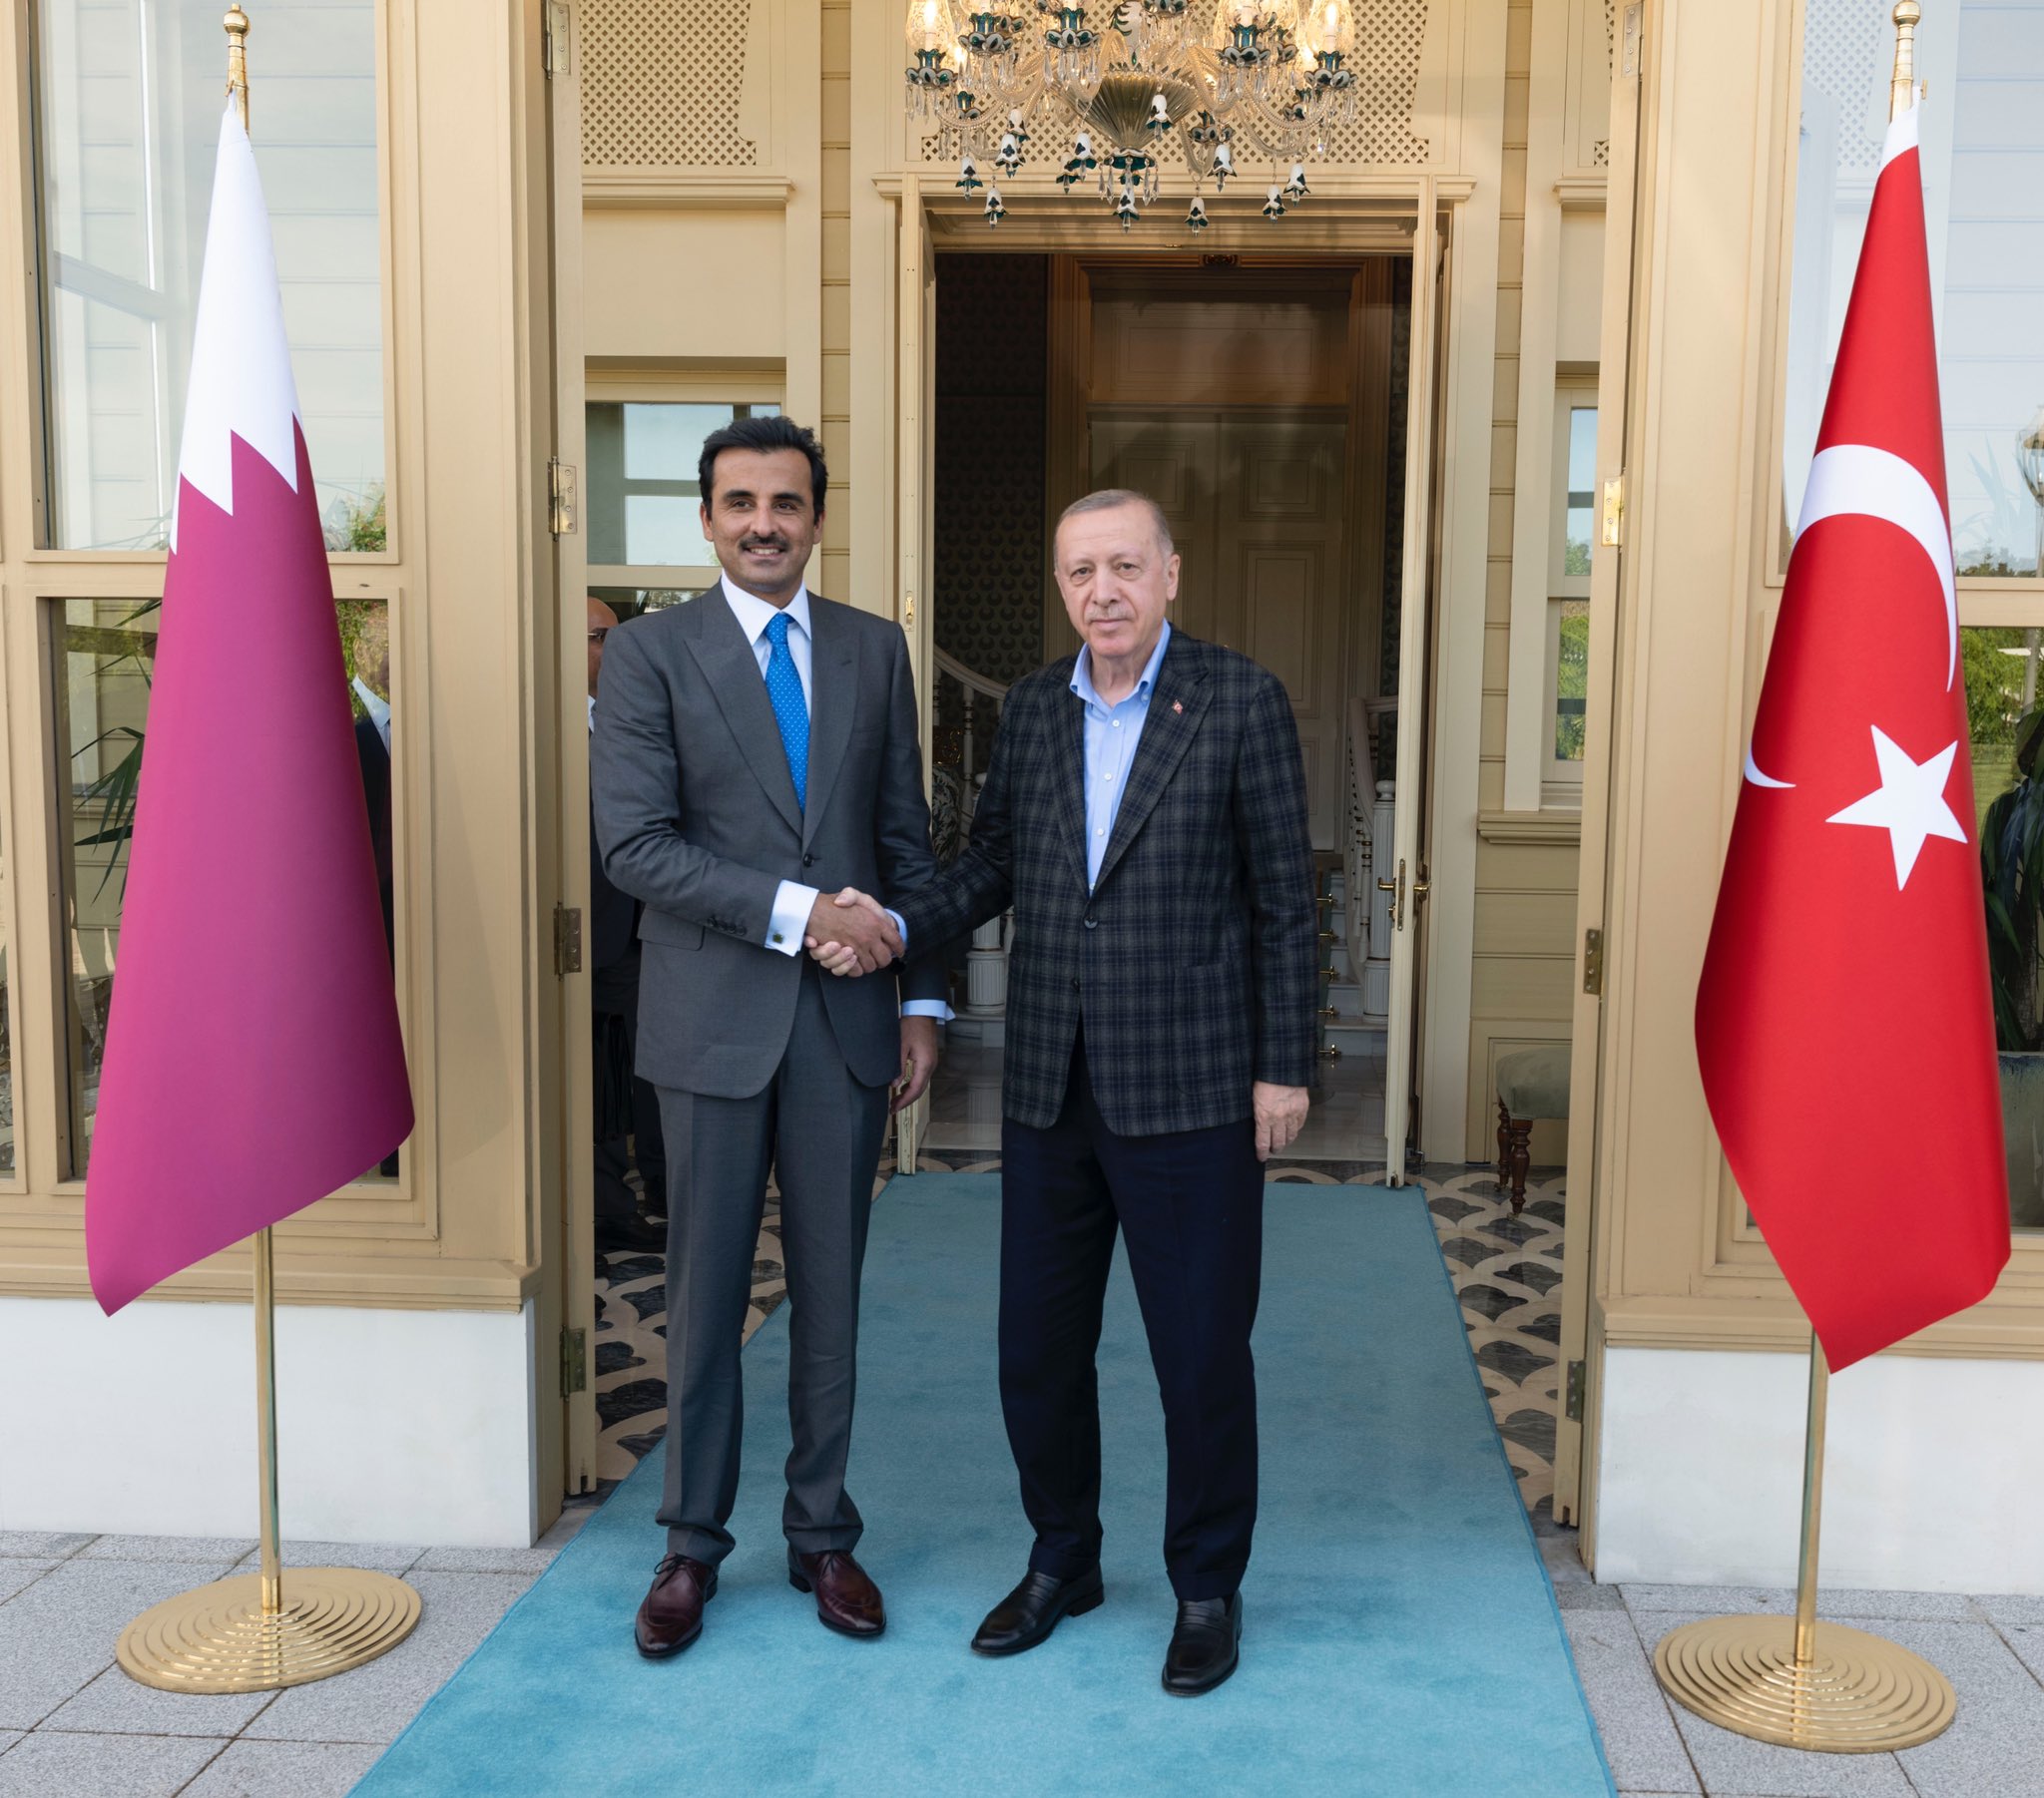 Qatar and Turkey...Strong and Fruitful Economic Partnership